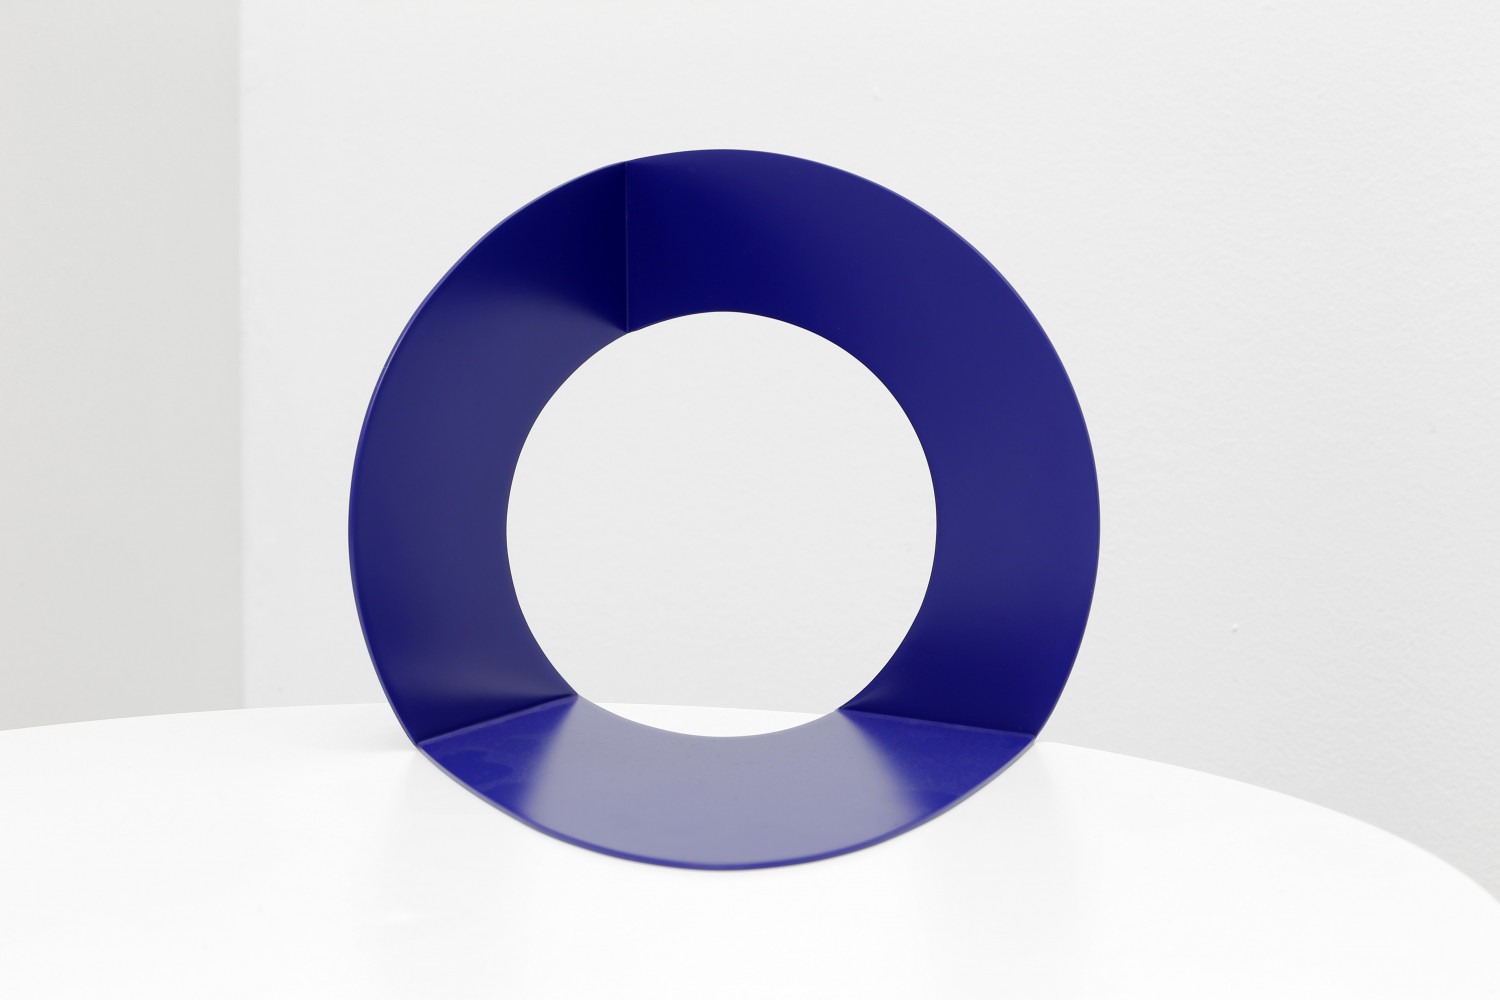 Felice Varini, ‘Cercle bleu’, 0013–2013